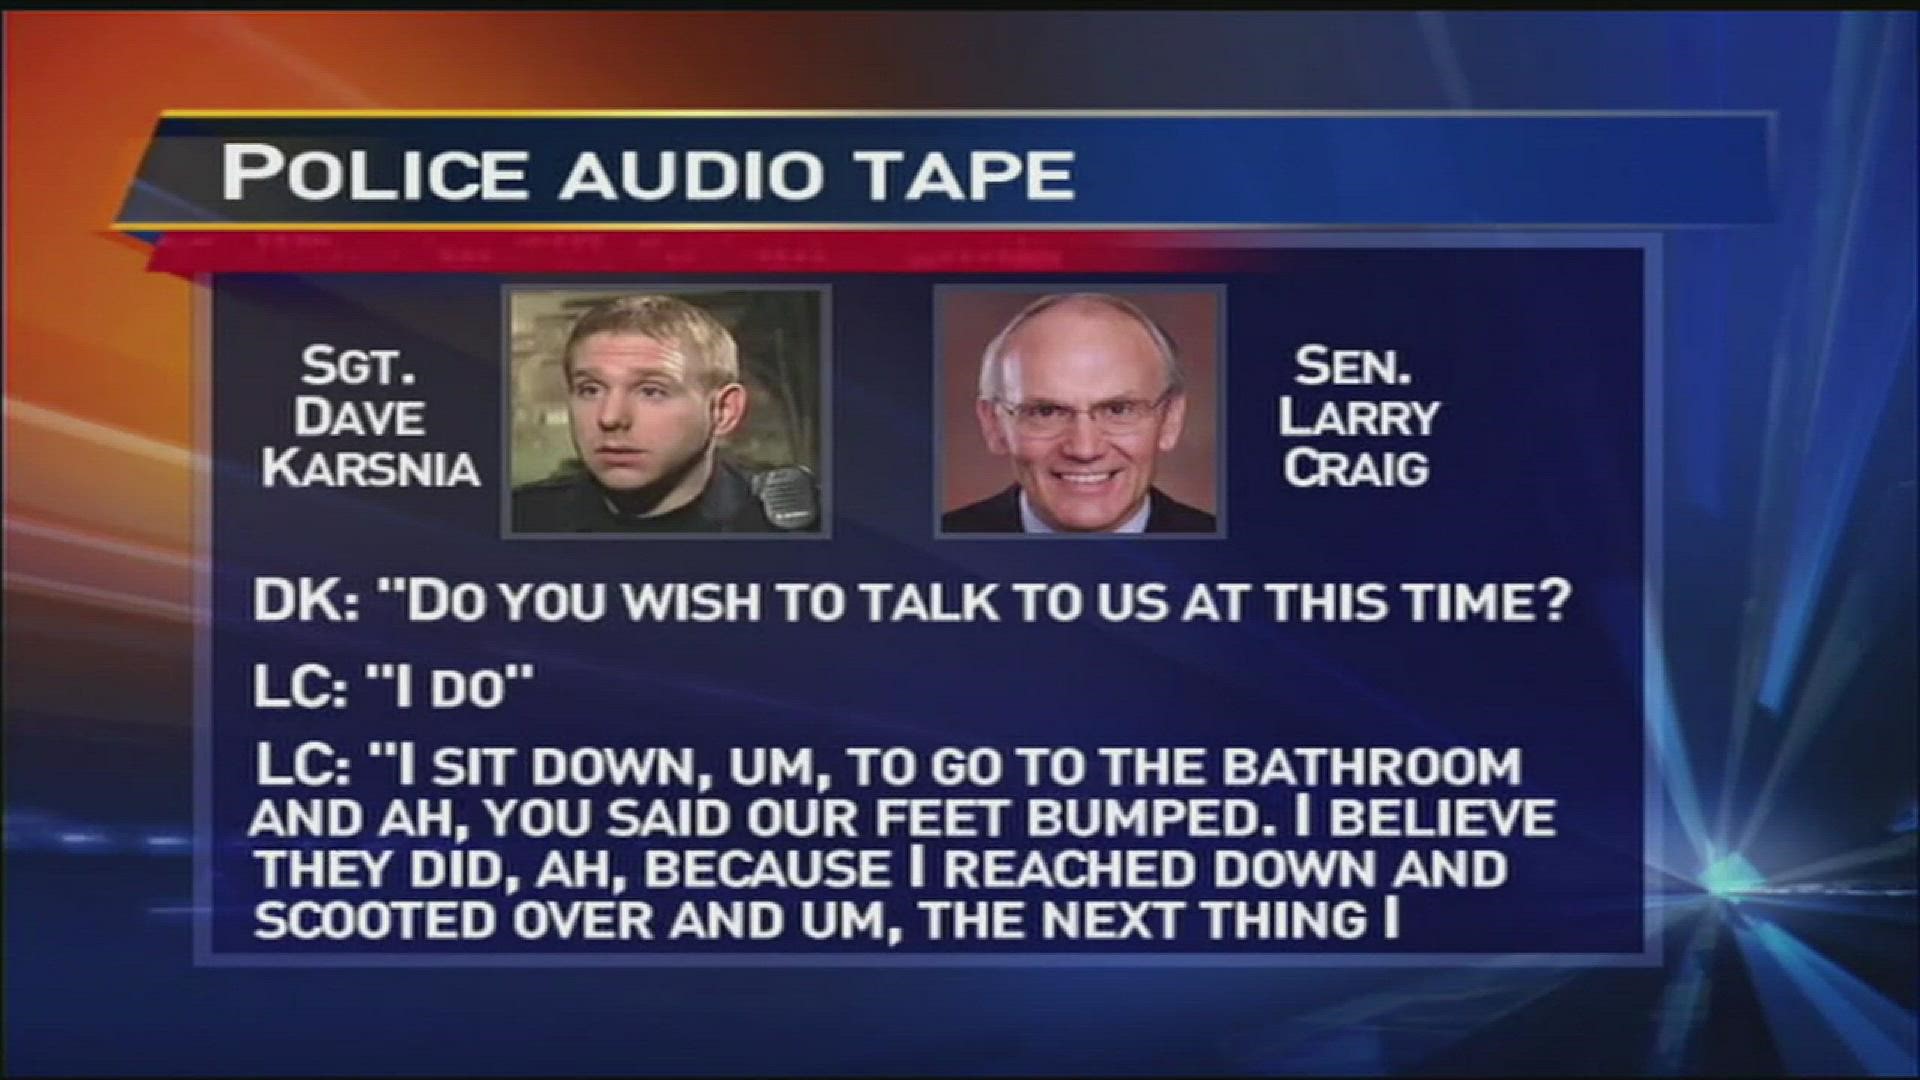 LISTEN: Officer interviews Larry Craig after bathroom incident